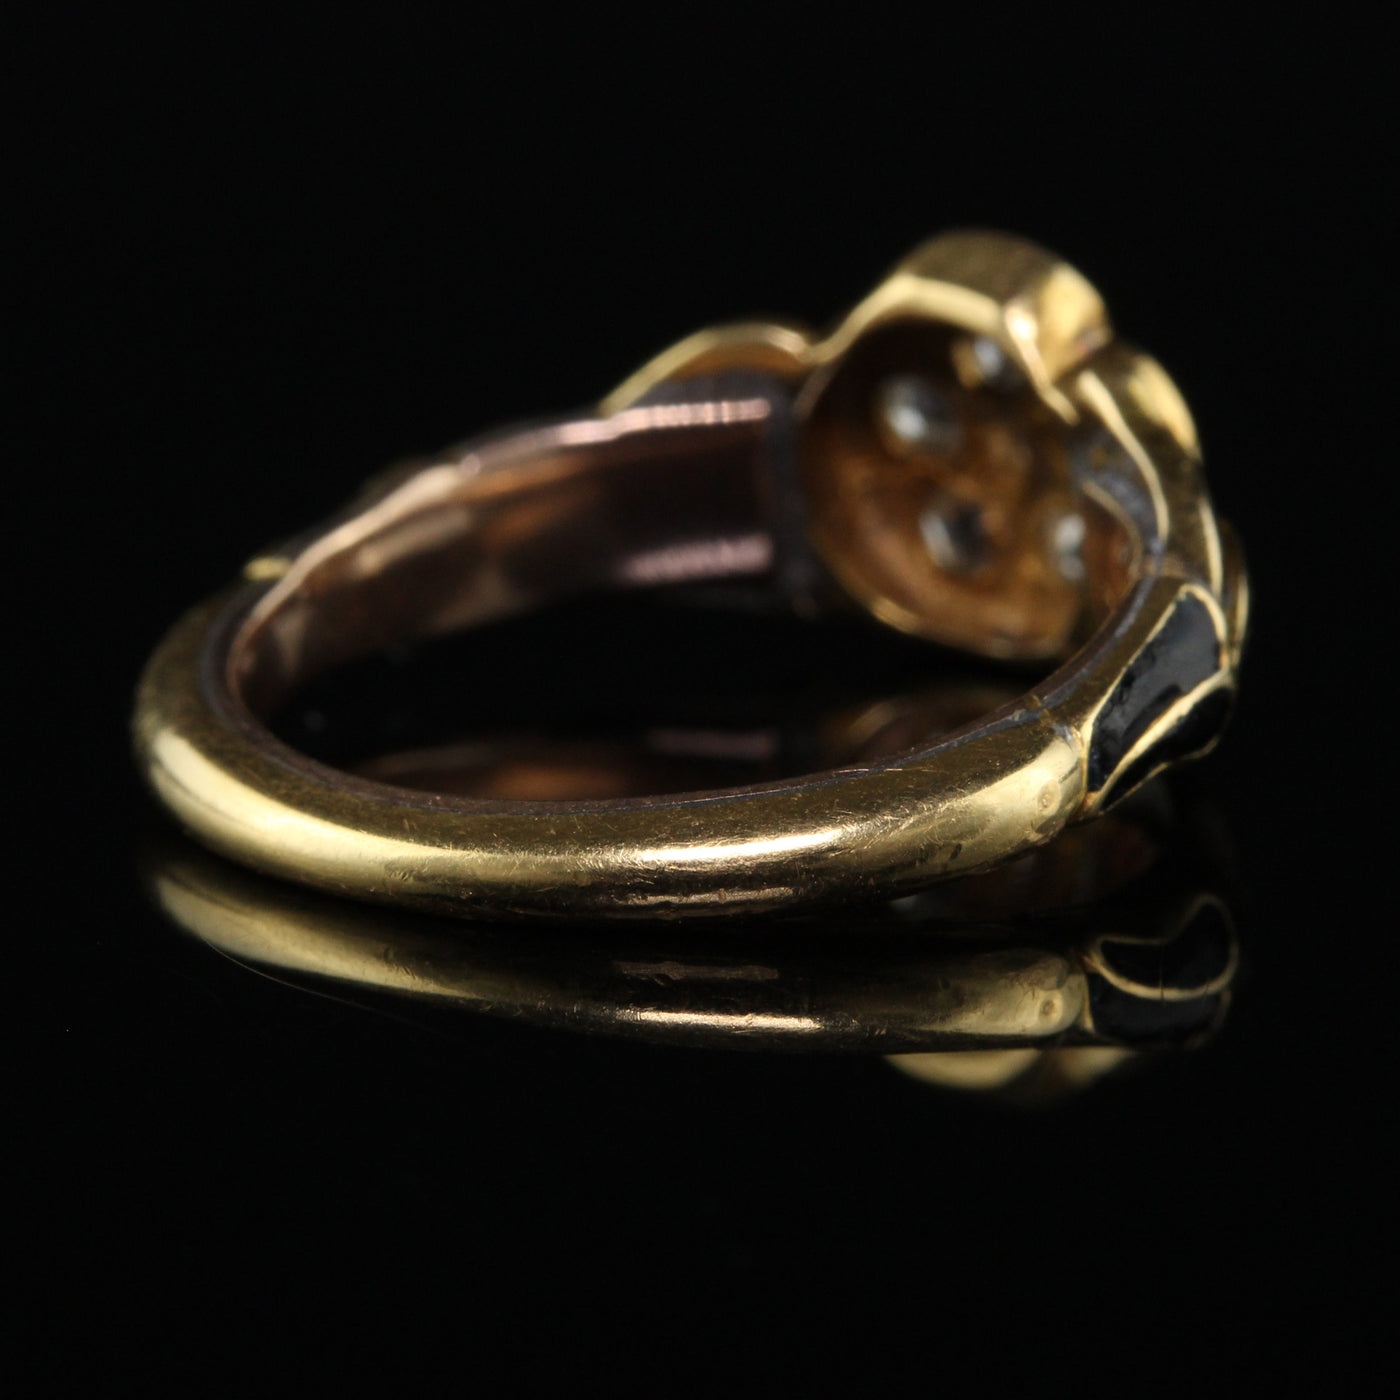 Antique Victorian 18K Yellow Gold Old Mine Cut Diamond Black Enamel Flower Ring